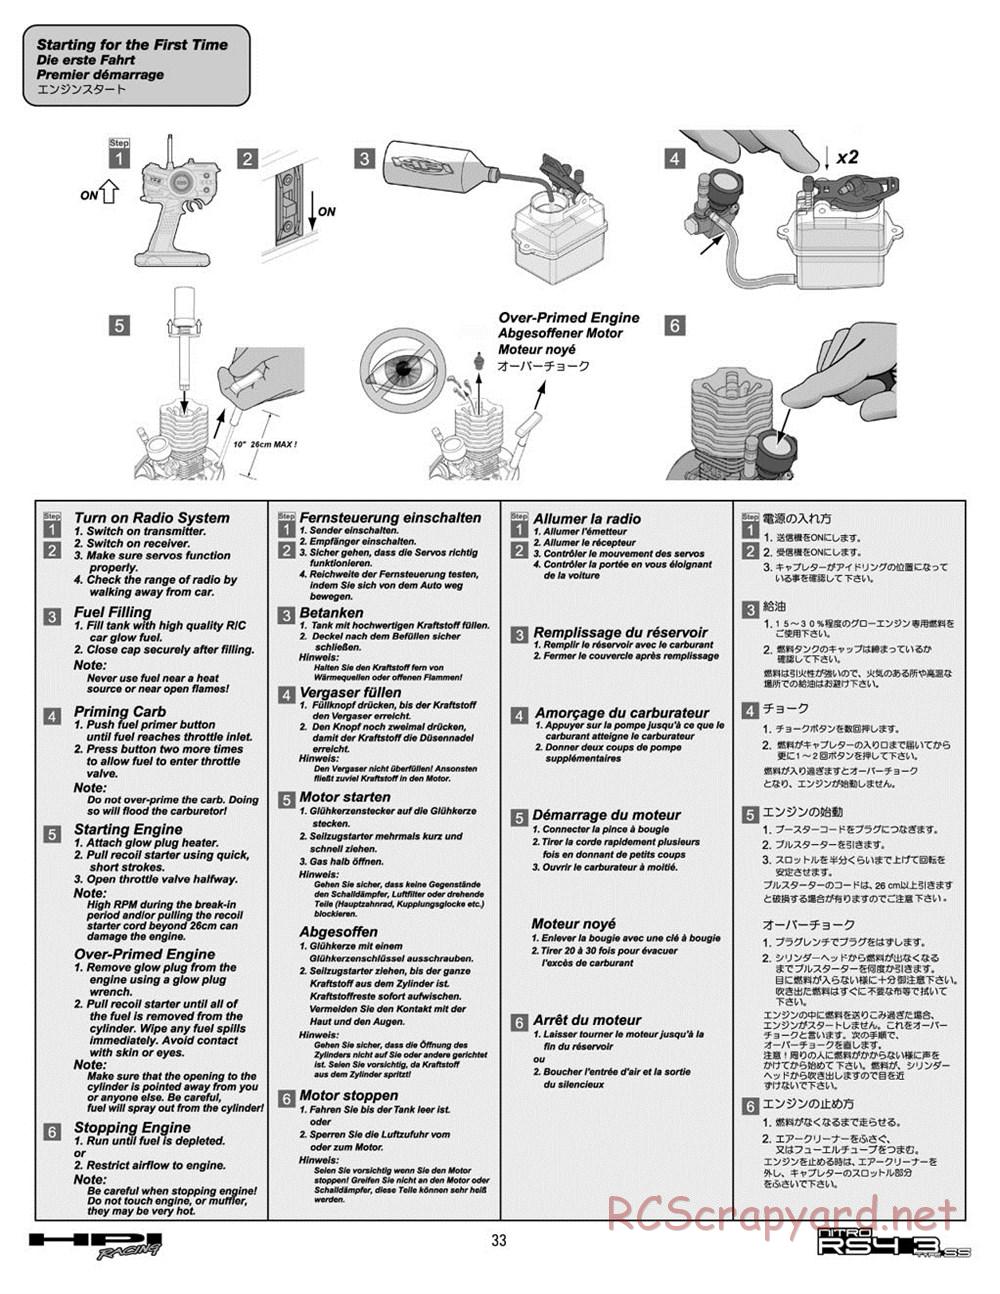 HPI - Nitro RS4 3 SS (2002) - Manual - Page 33